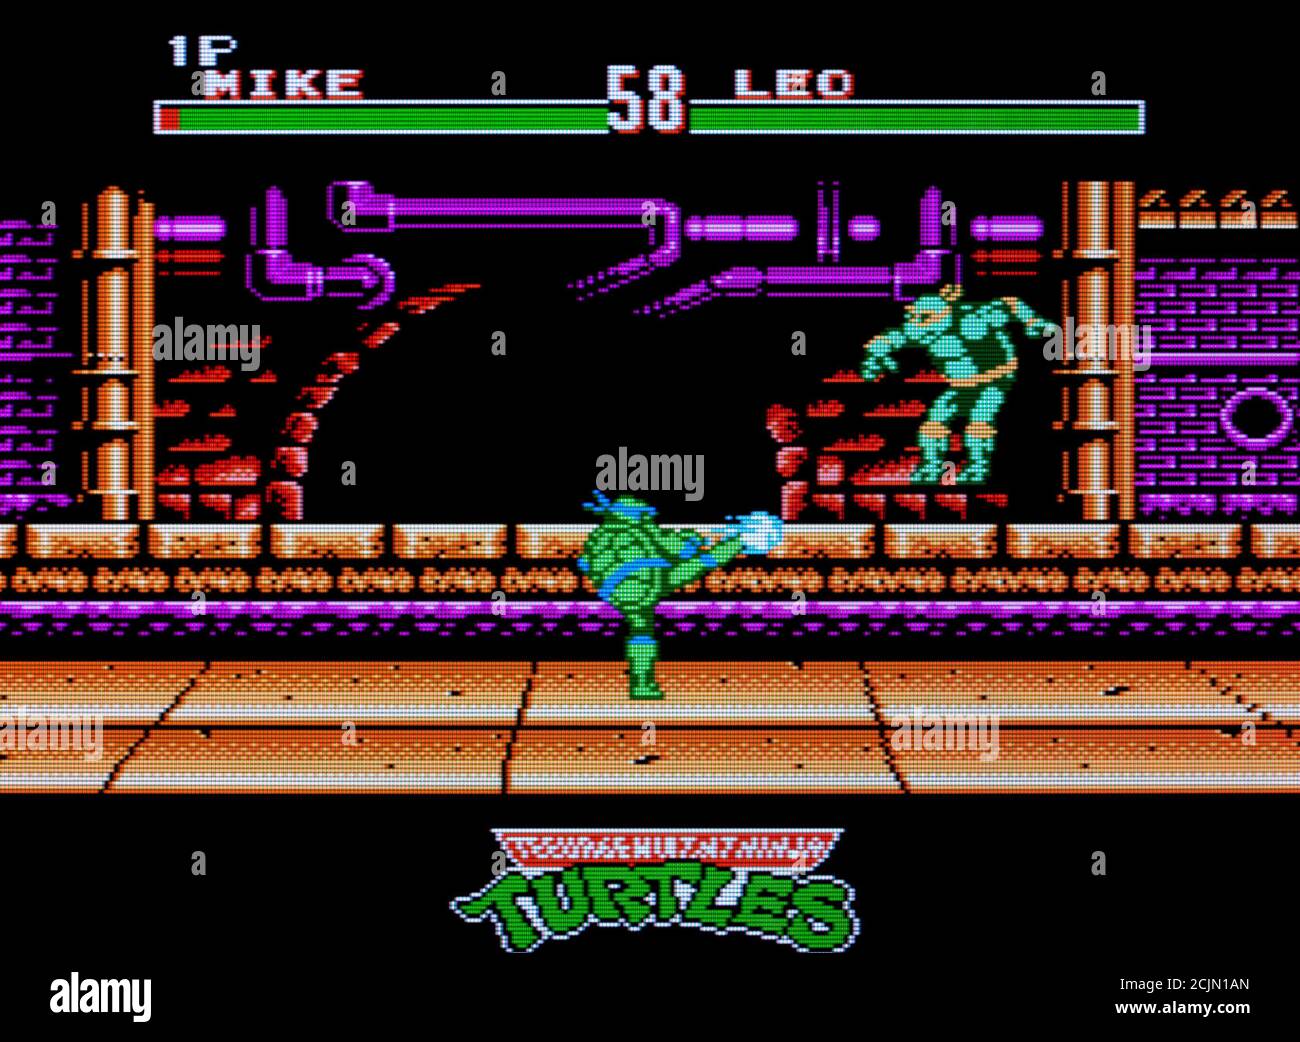 Teenage Mutant Ninja Turtles Tournament Fighter - Nintendo Entertainment  System - NES Videogame - Editorial use only Stock Photo - Alamy